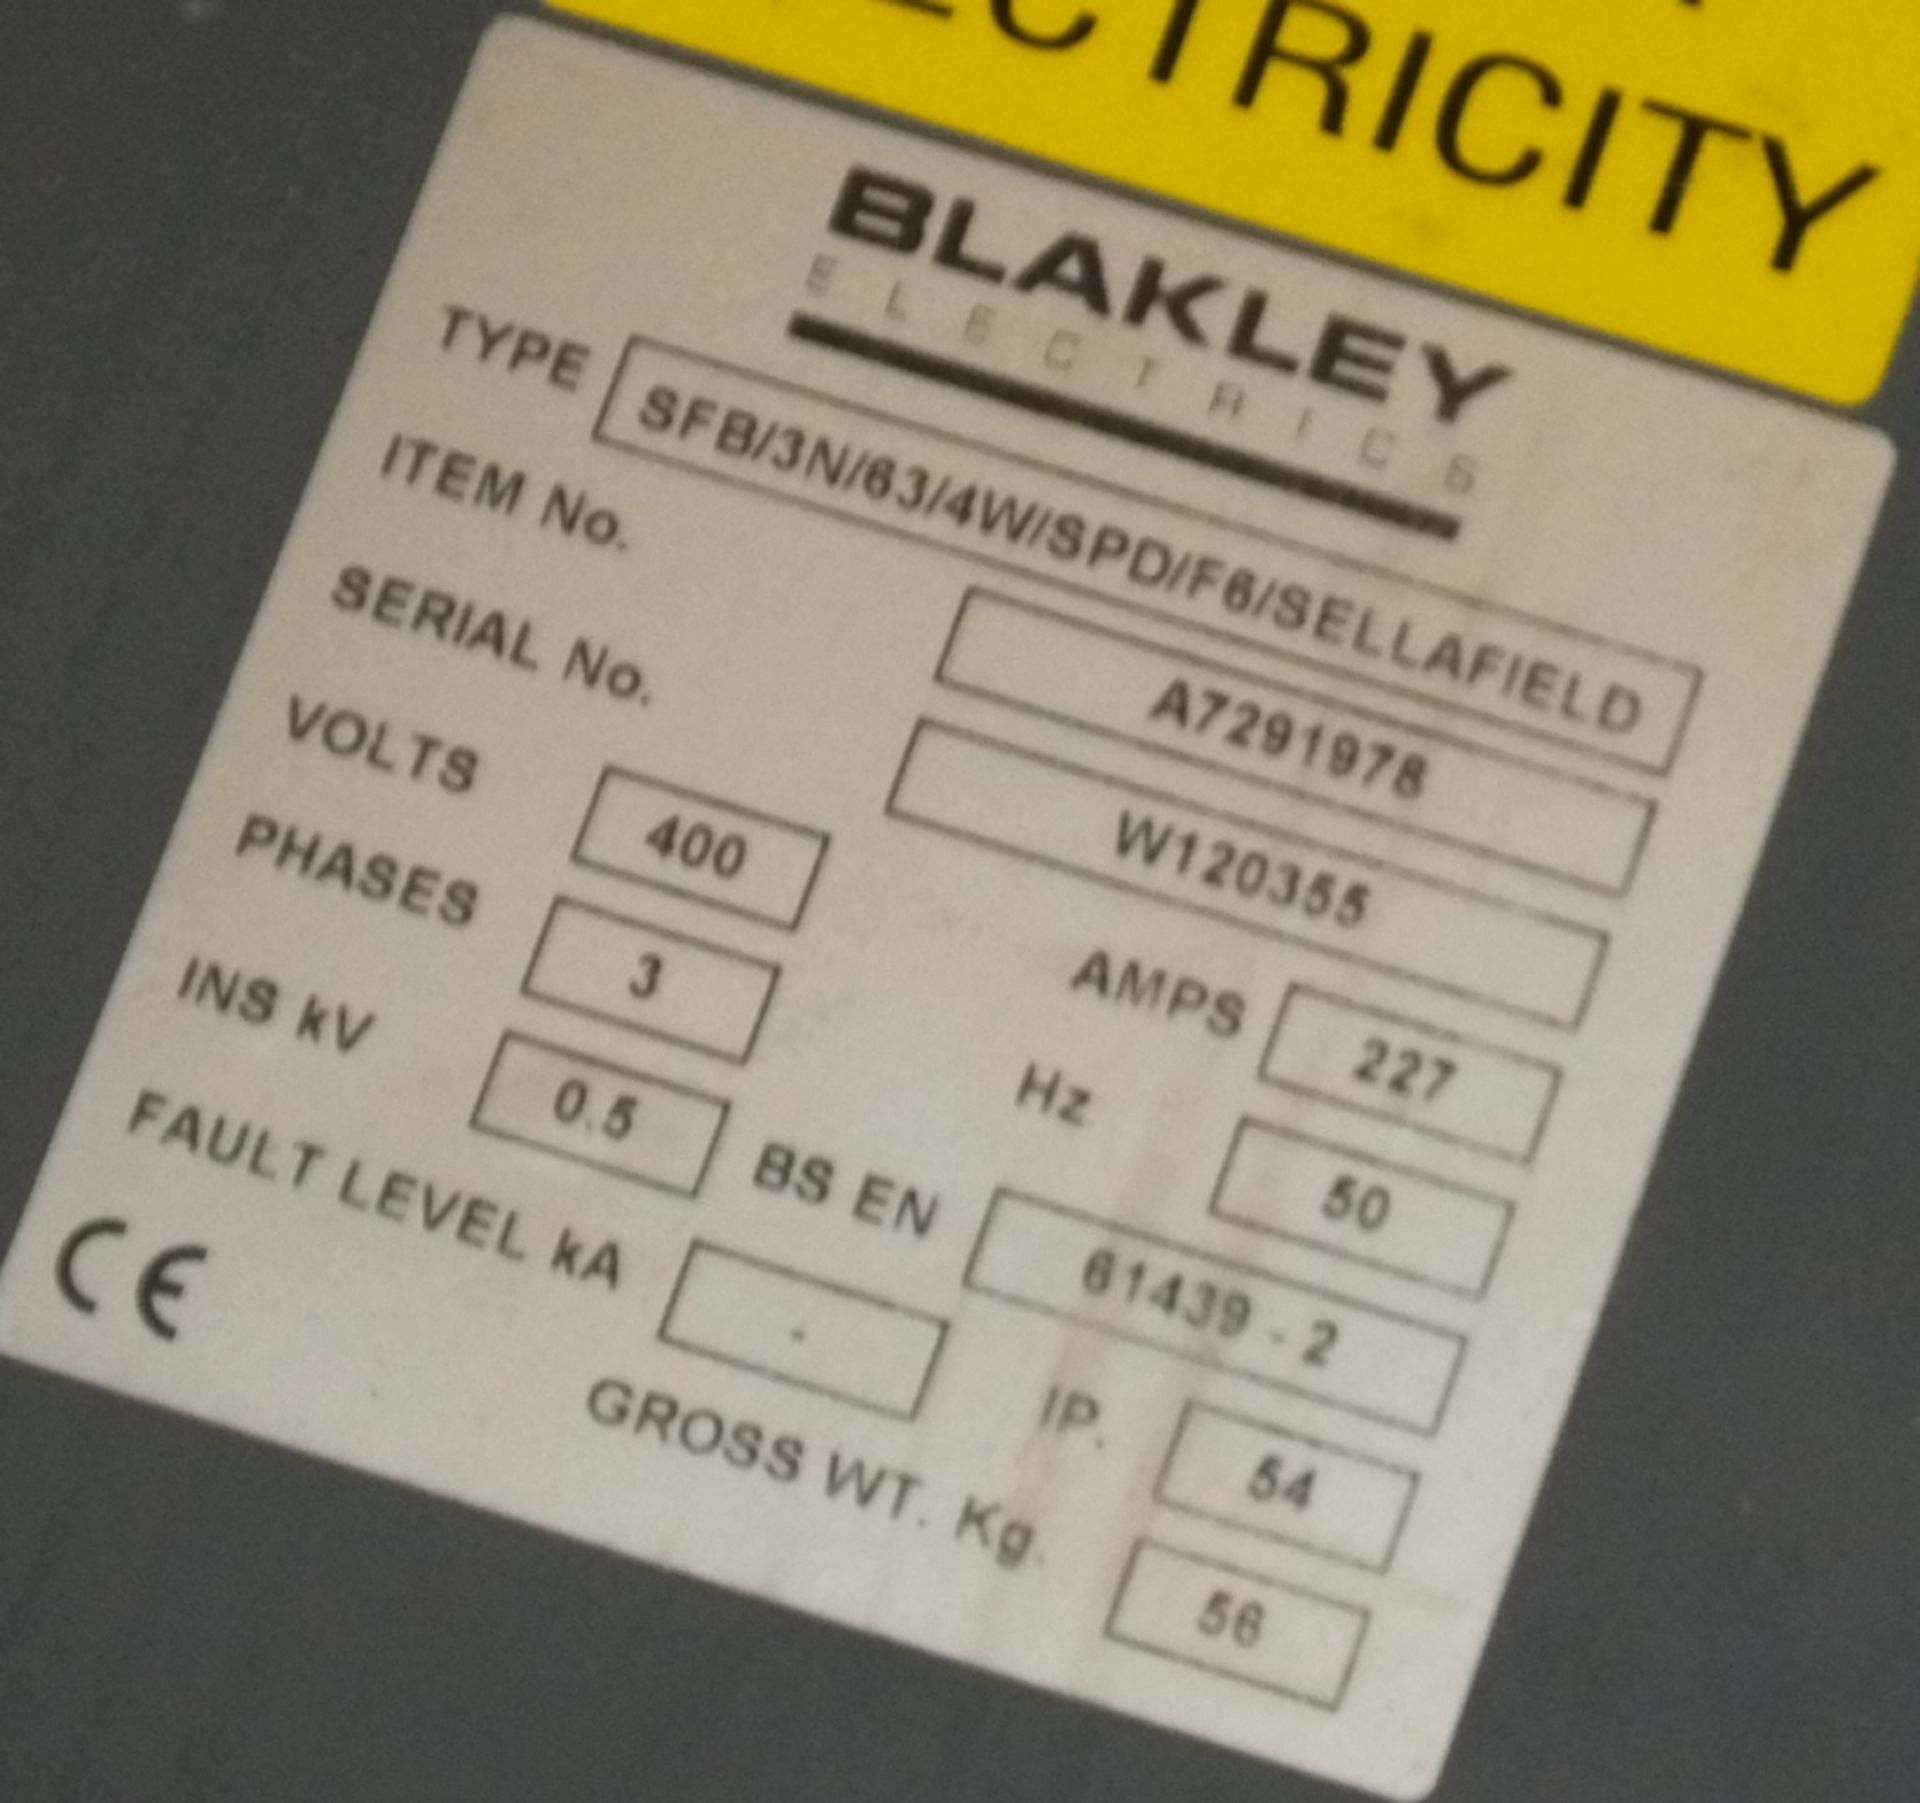 Blakeley SFB/3N/63/4W/SPD/F6 Power juction / distribution box - A7291978 - Bild 2 aus 2